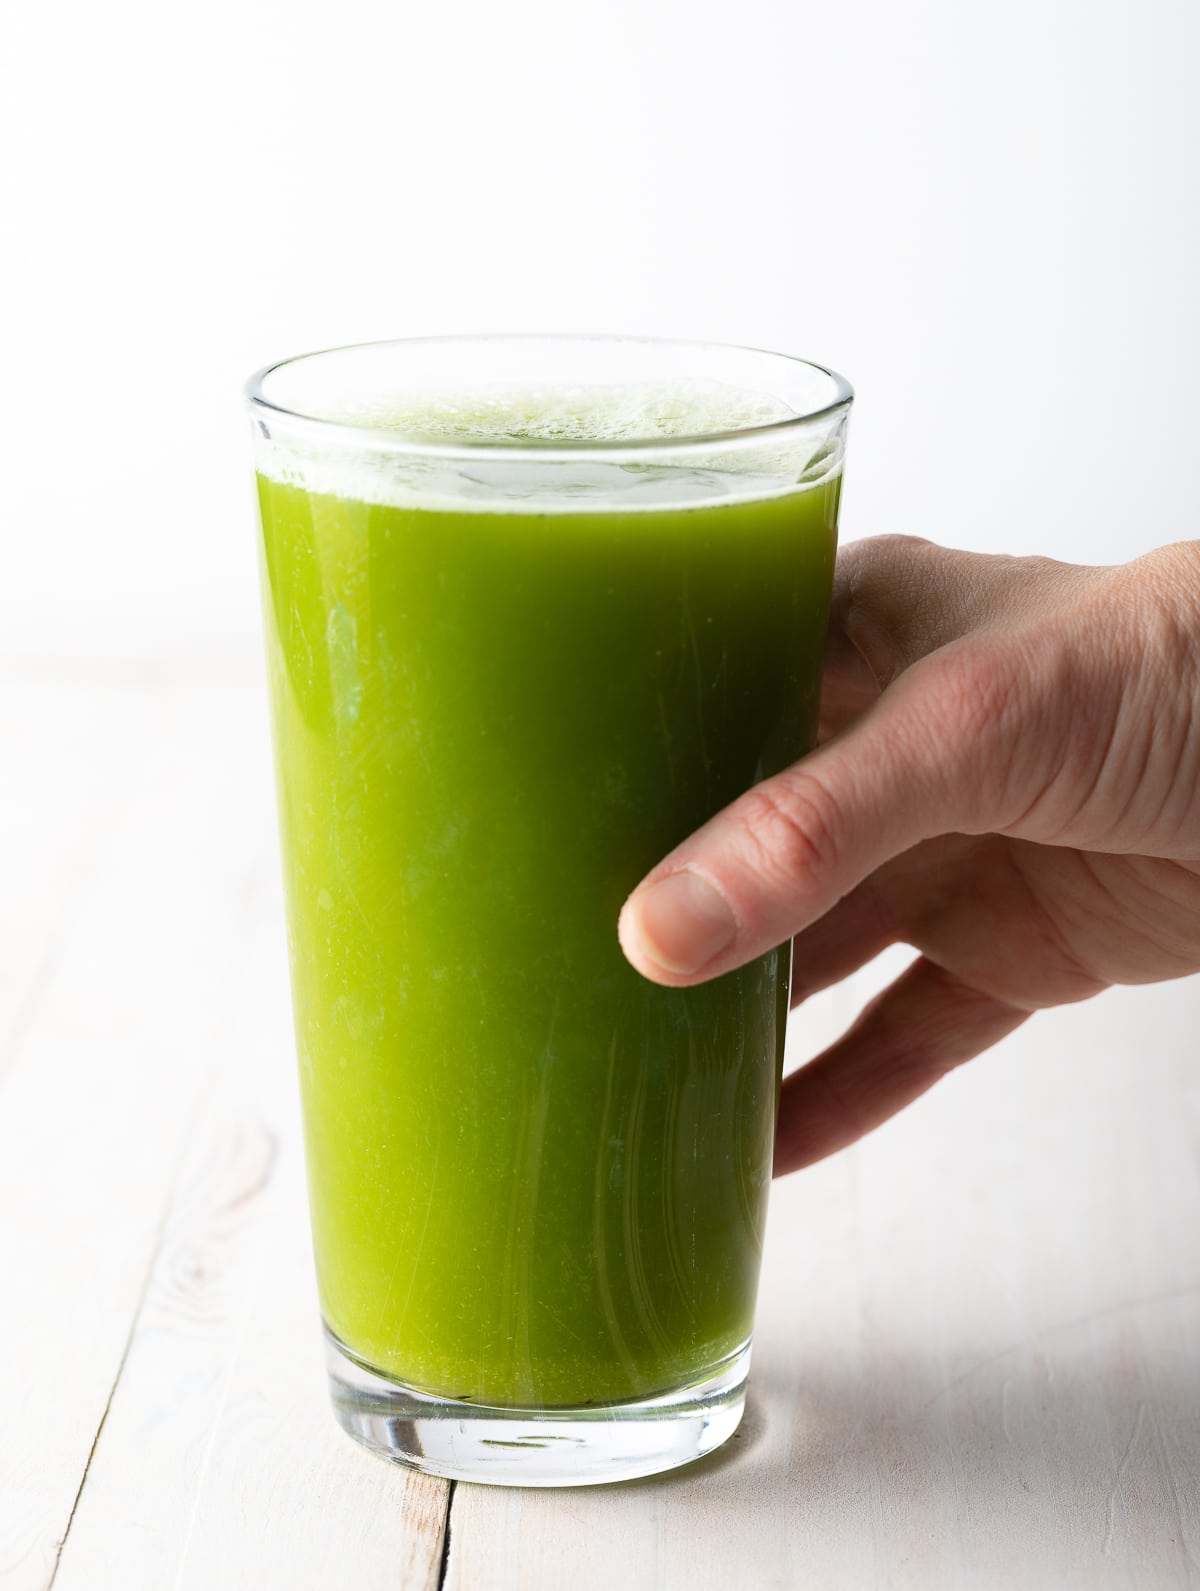 celery and apple juice benefits